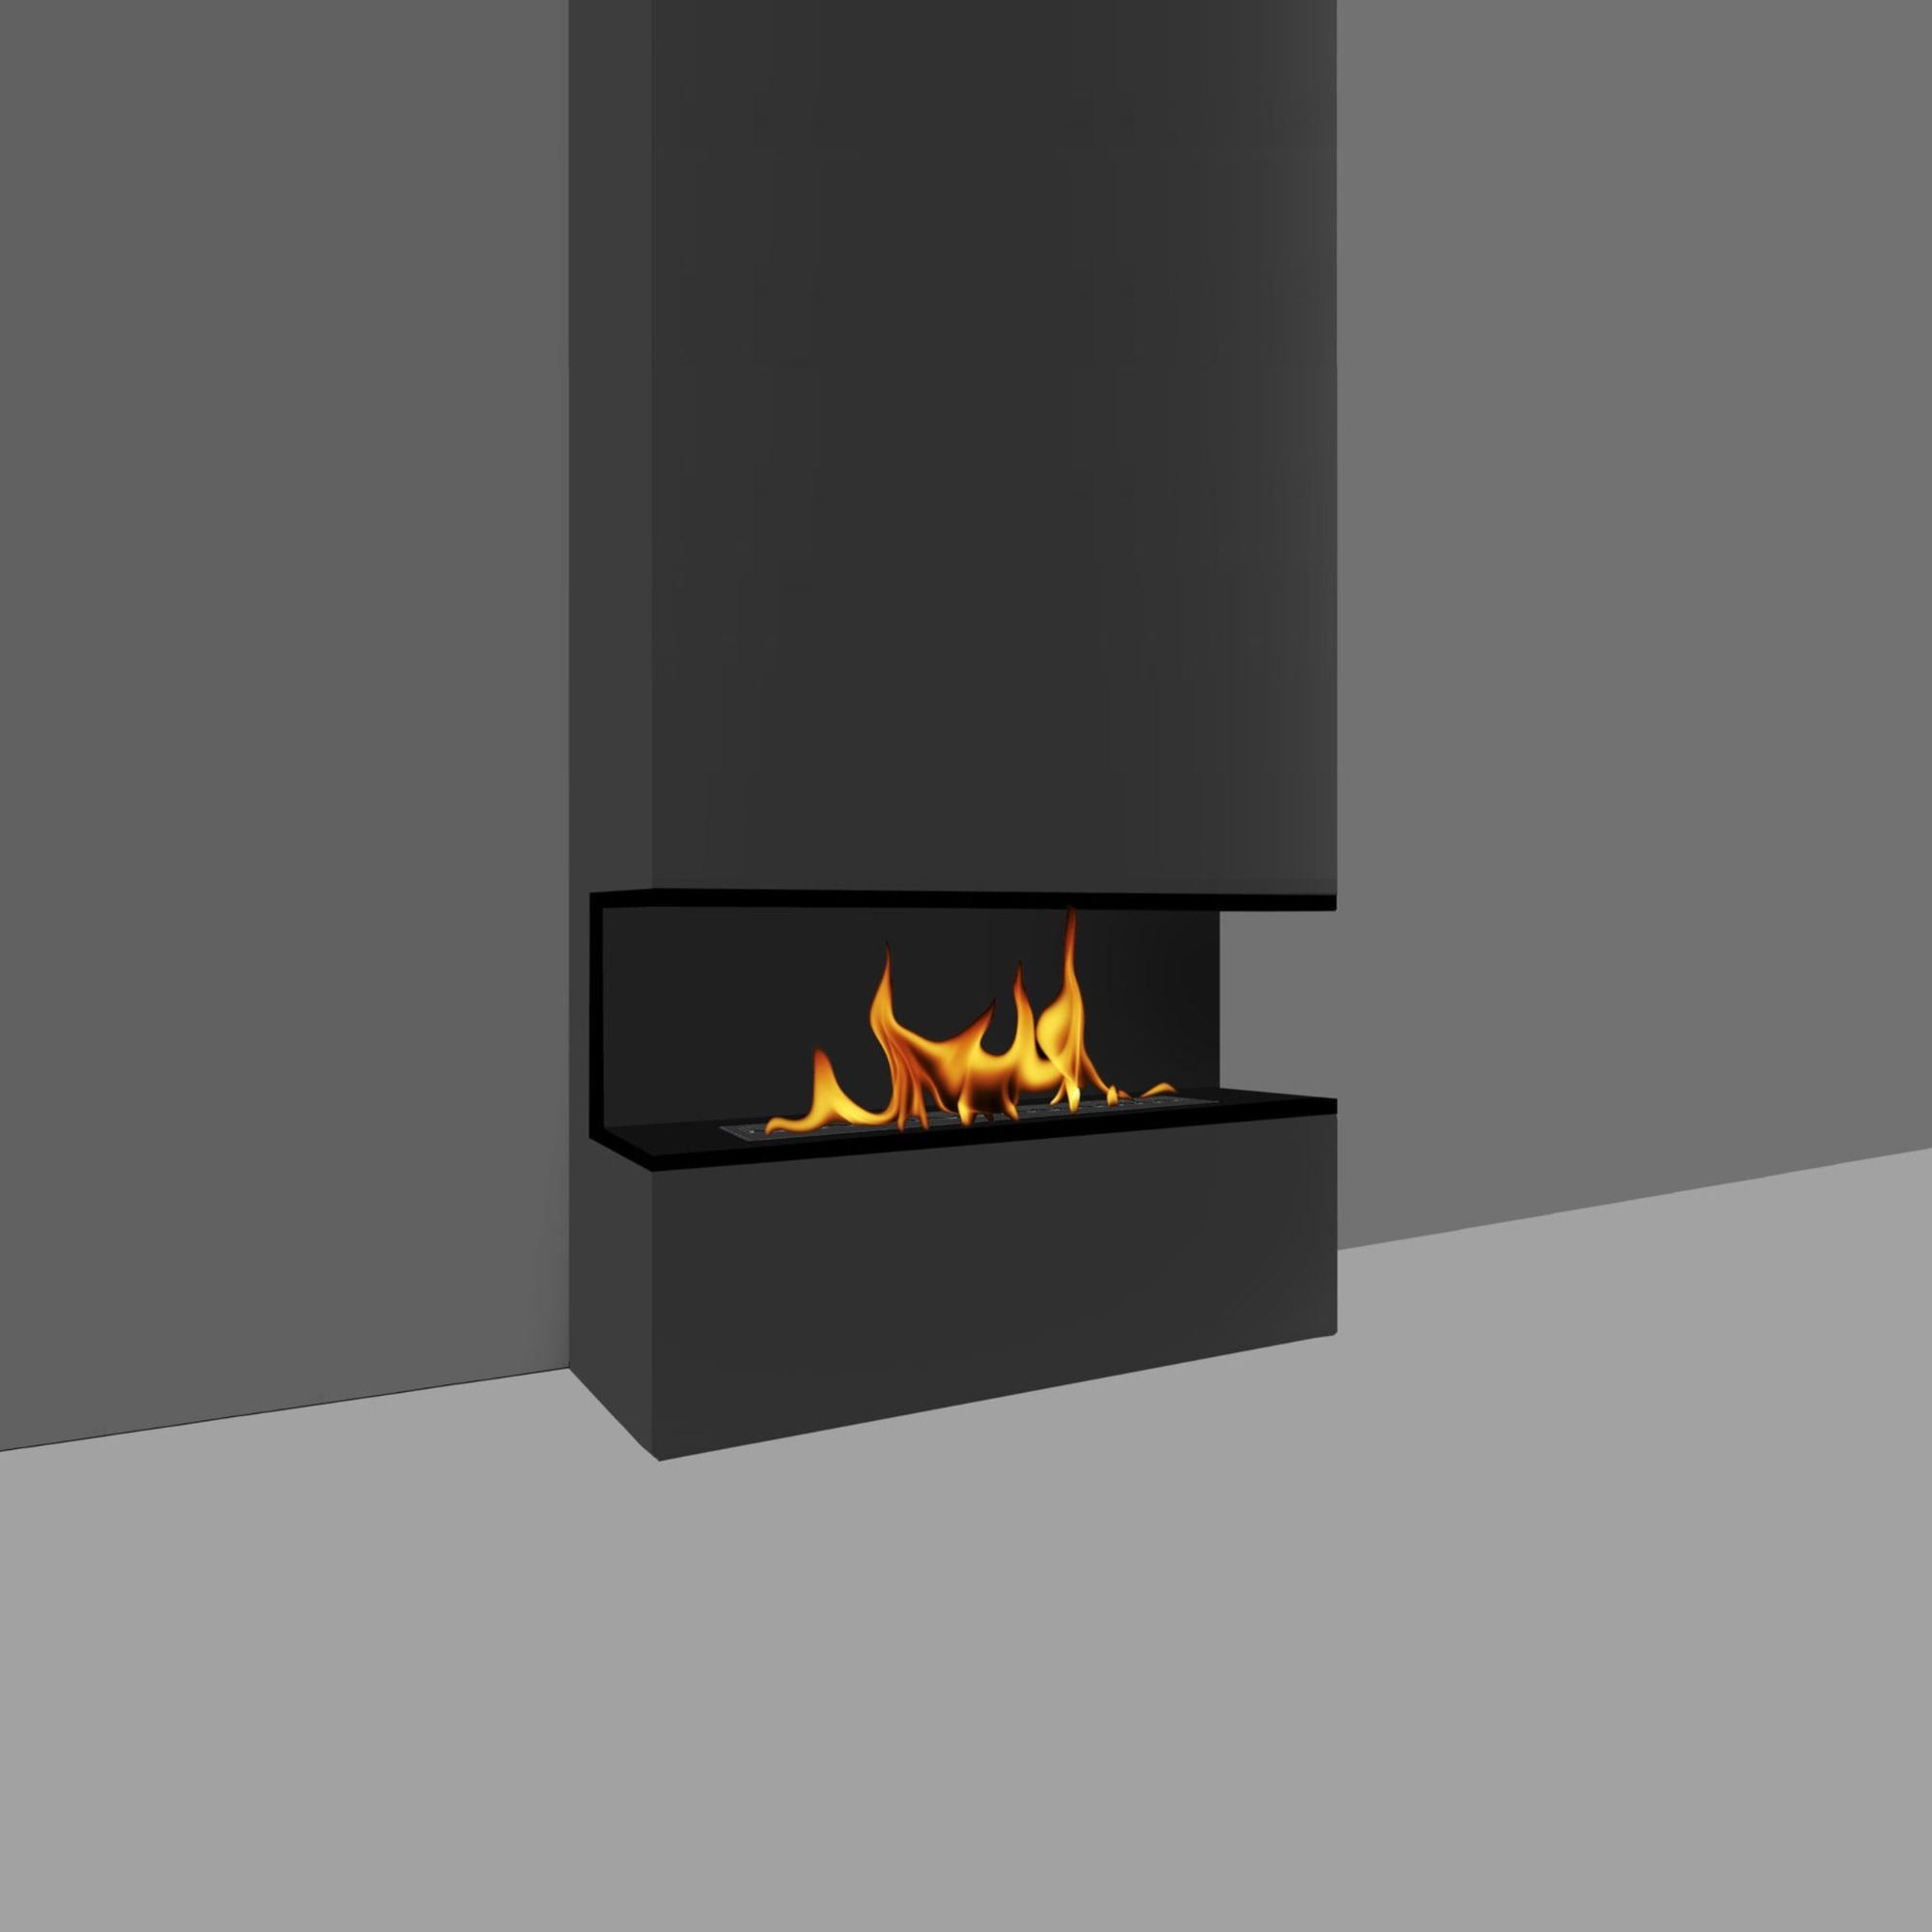 Izala Design Built-in Fireplace 184 CM